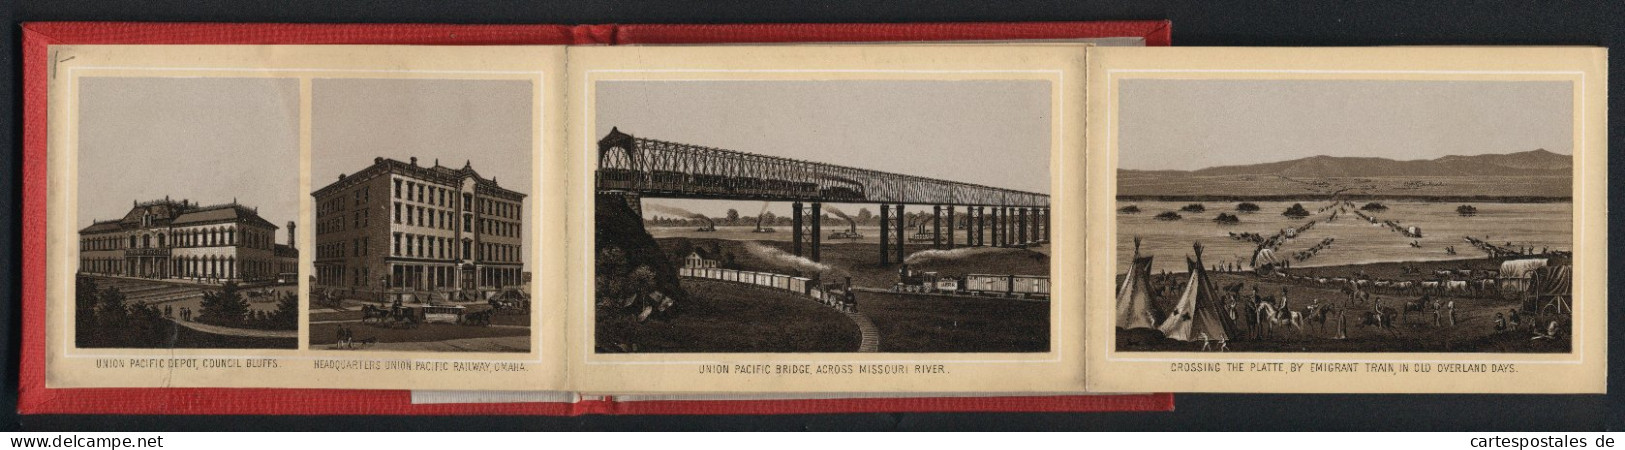 Leporello-Album Union Pacific Railwaymit 24 Lithographie-Ansichten, Headquarter Omaha, Weber Canon, Devils Gate, Ogden  - Litografía